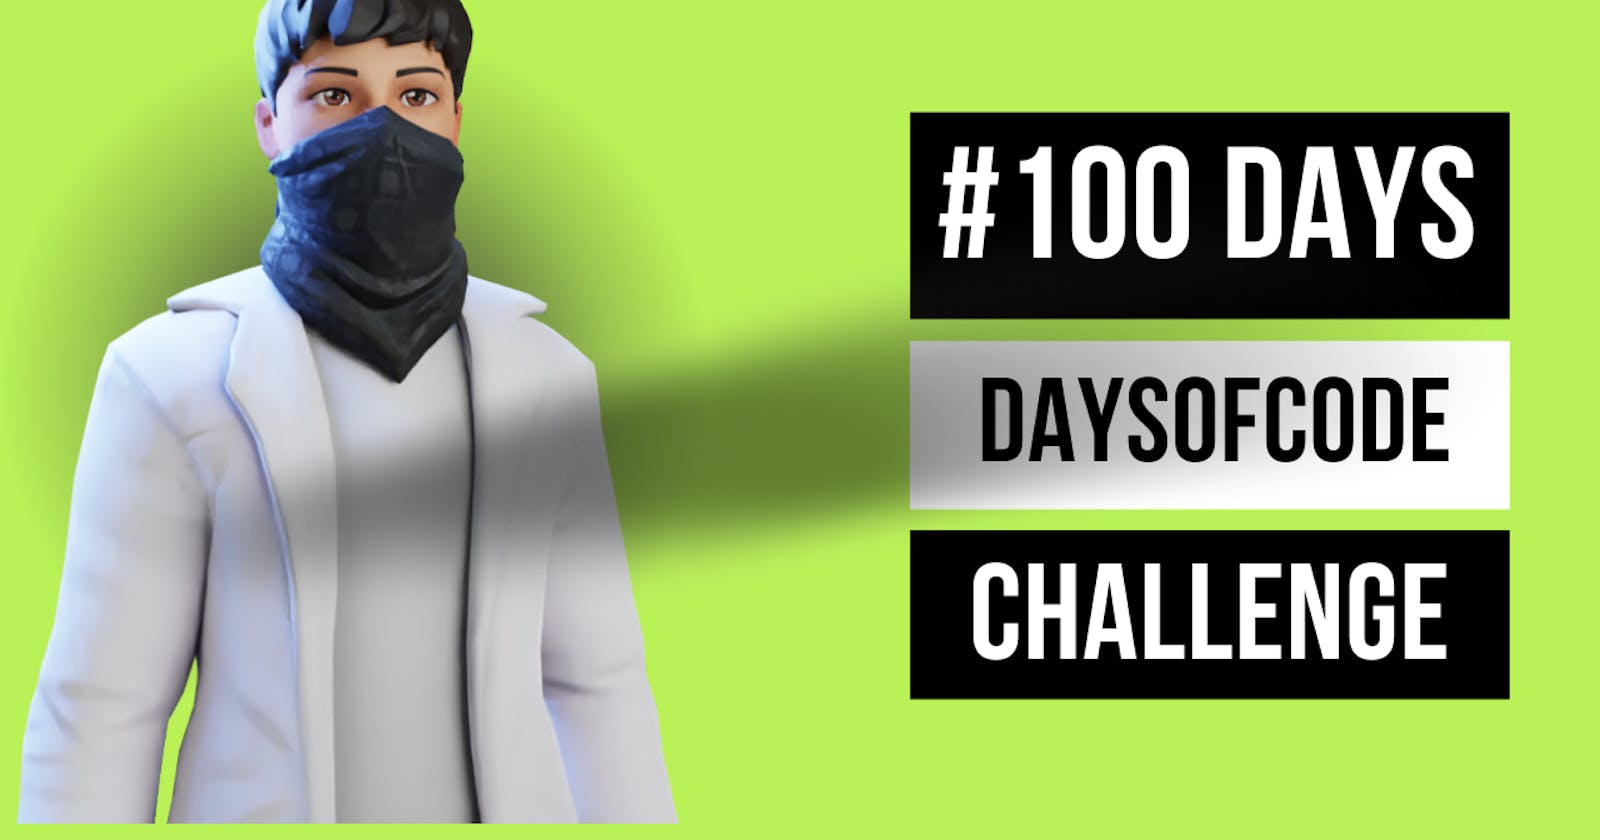 #100daysofcodechallenge